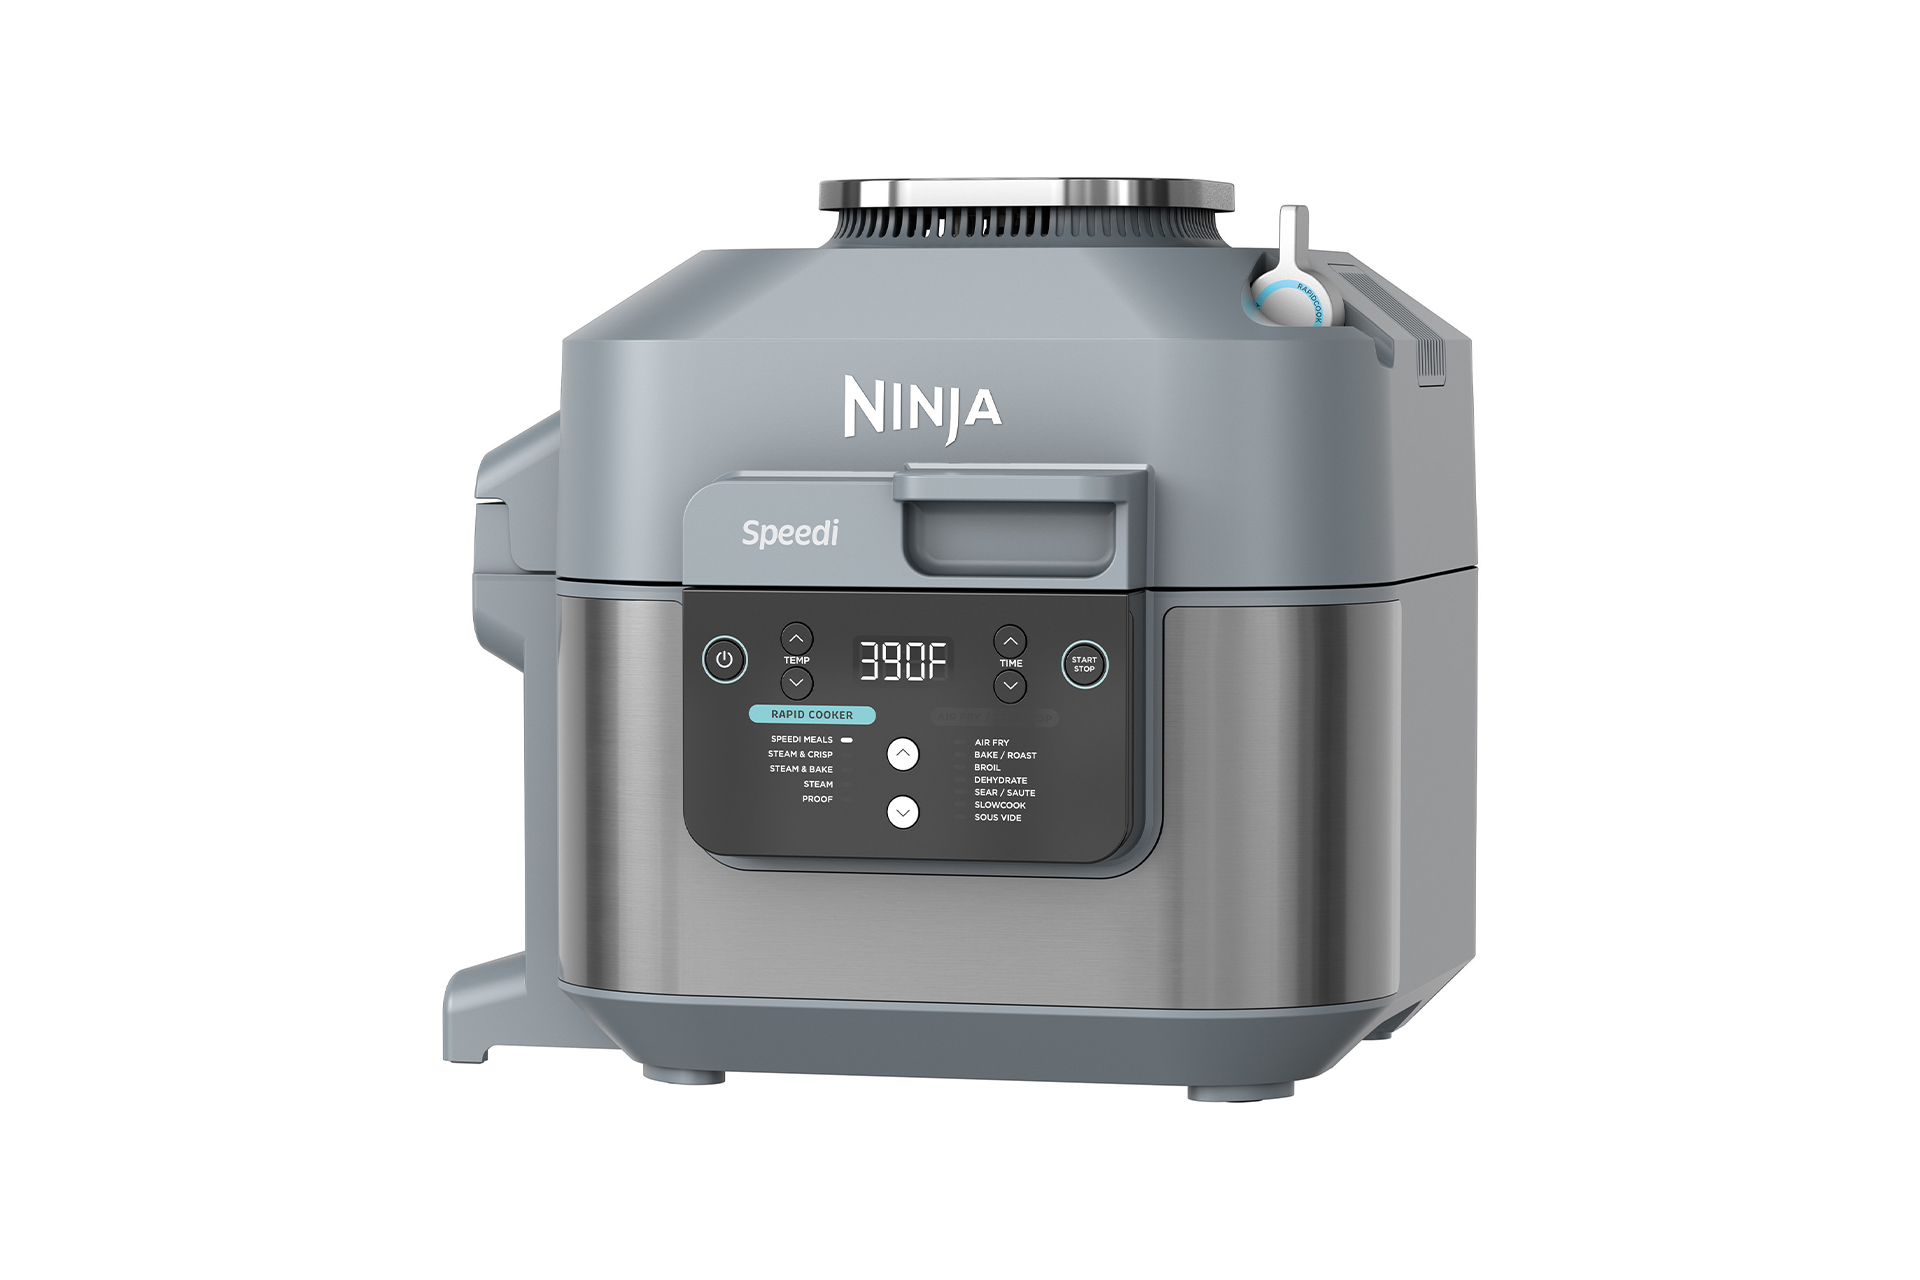 BUY NOW: Ninja Detect™ Power Kitchen System Pro - Life At SharkNinja